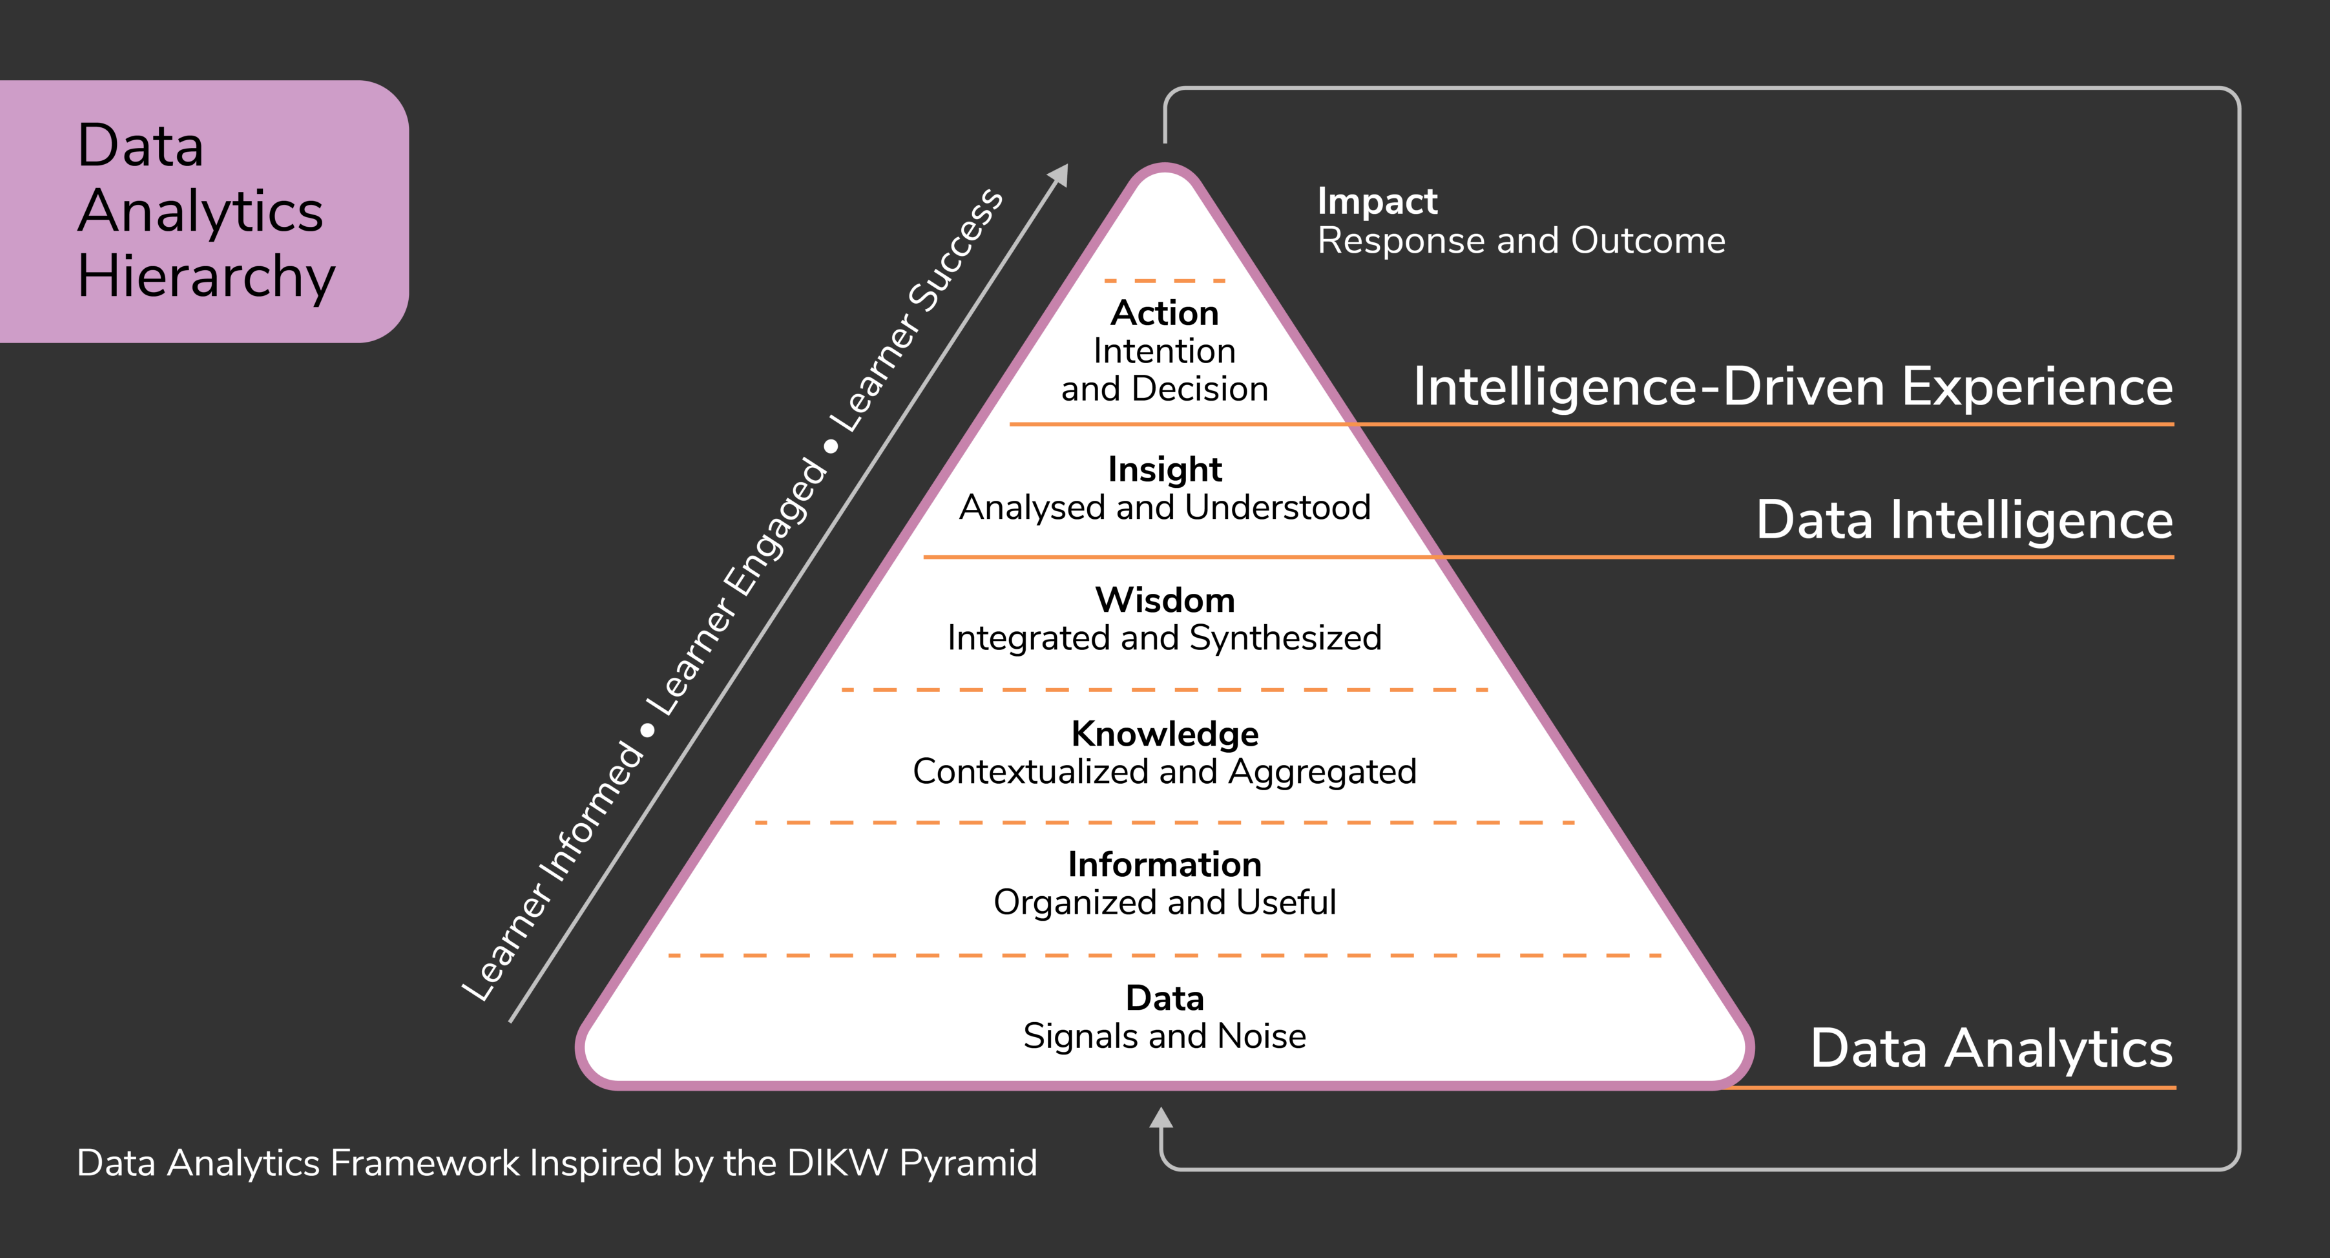 Data Analytics Framework Inspired by the DIKW Pyramid